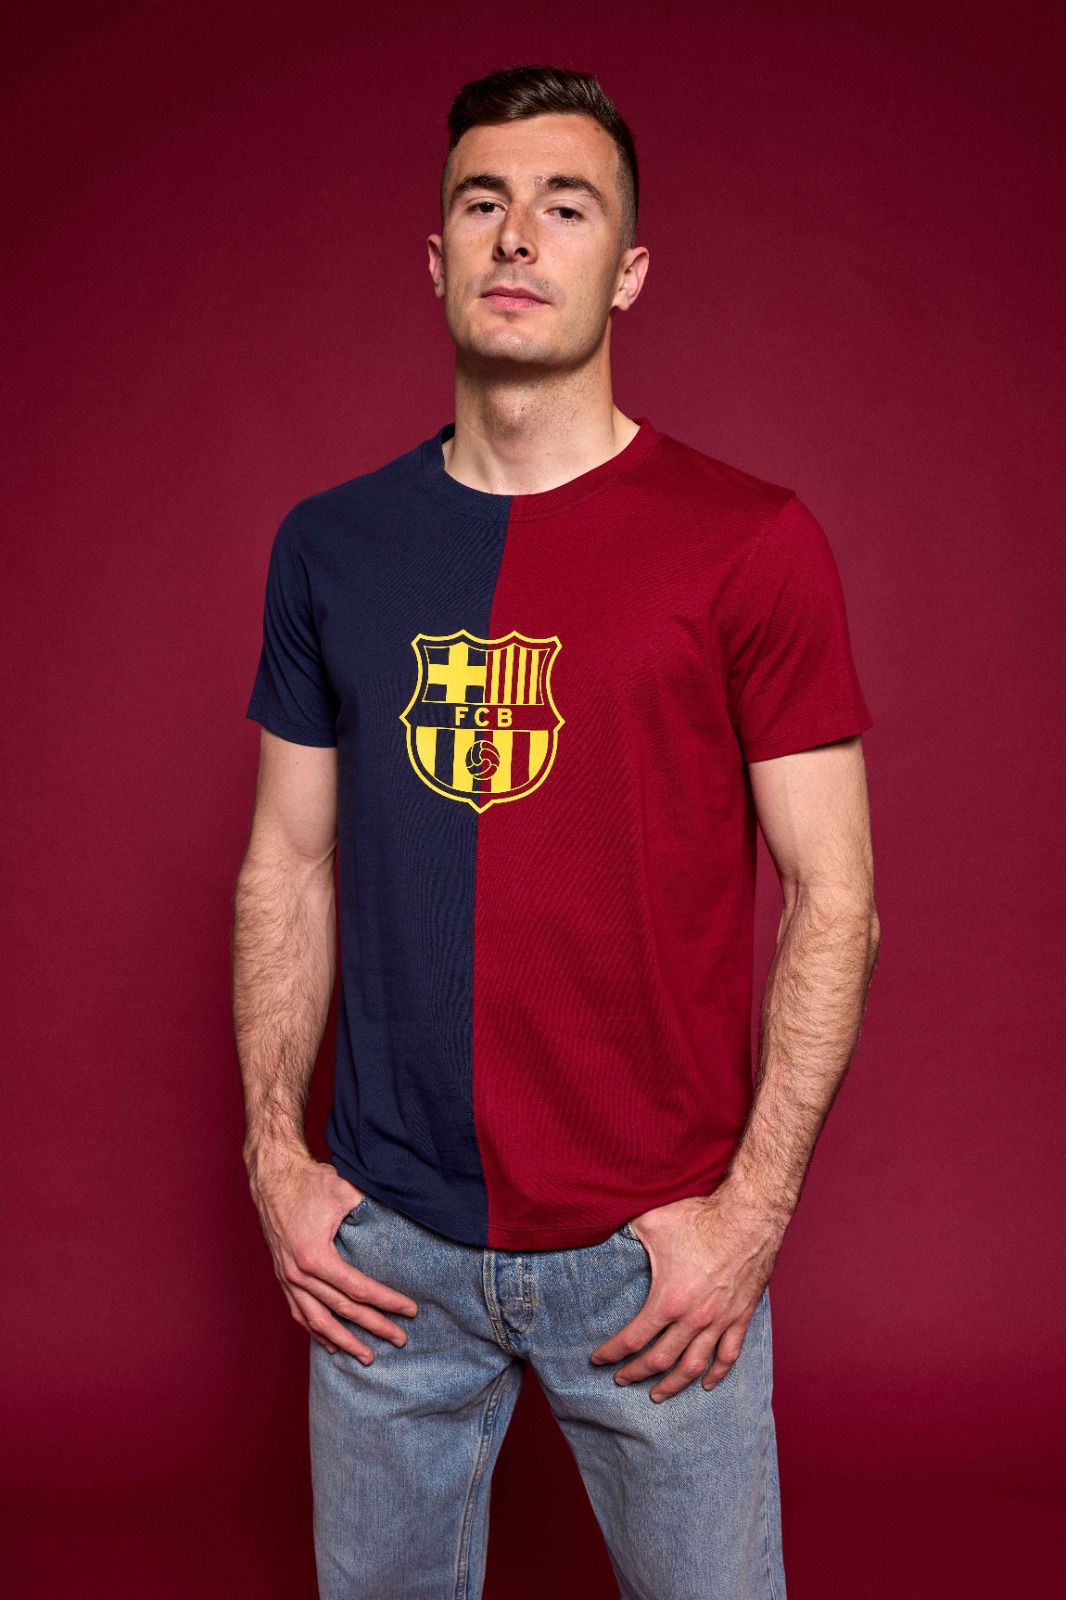 Zweifarbiges T-Shirt FC Barcelona